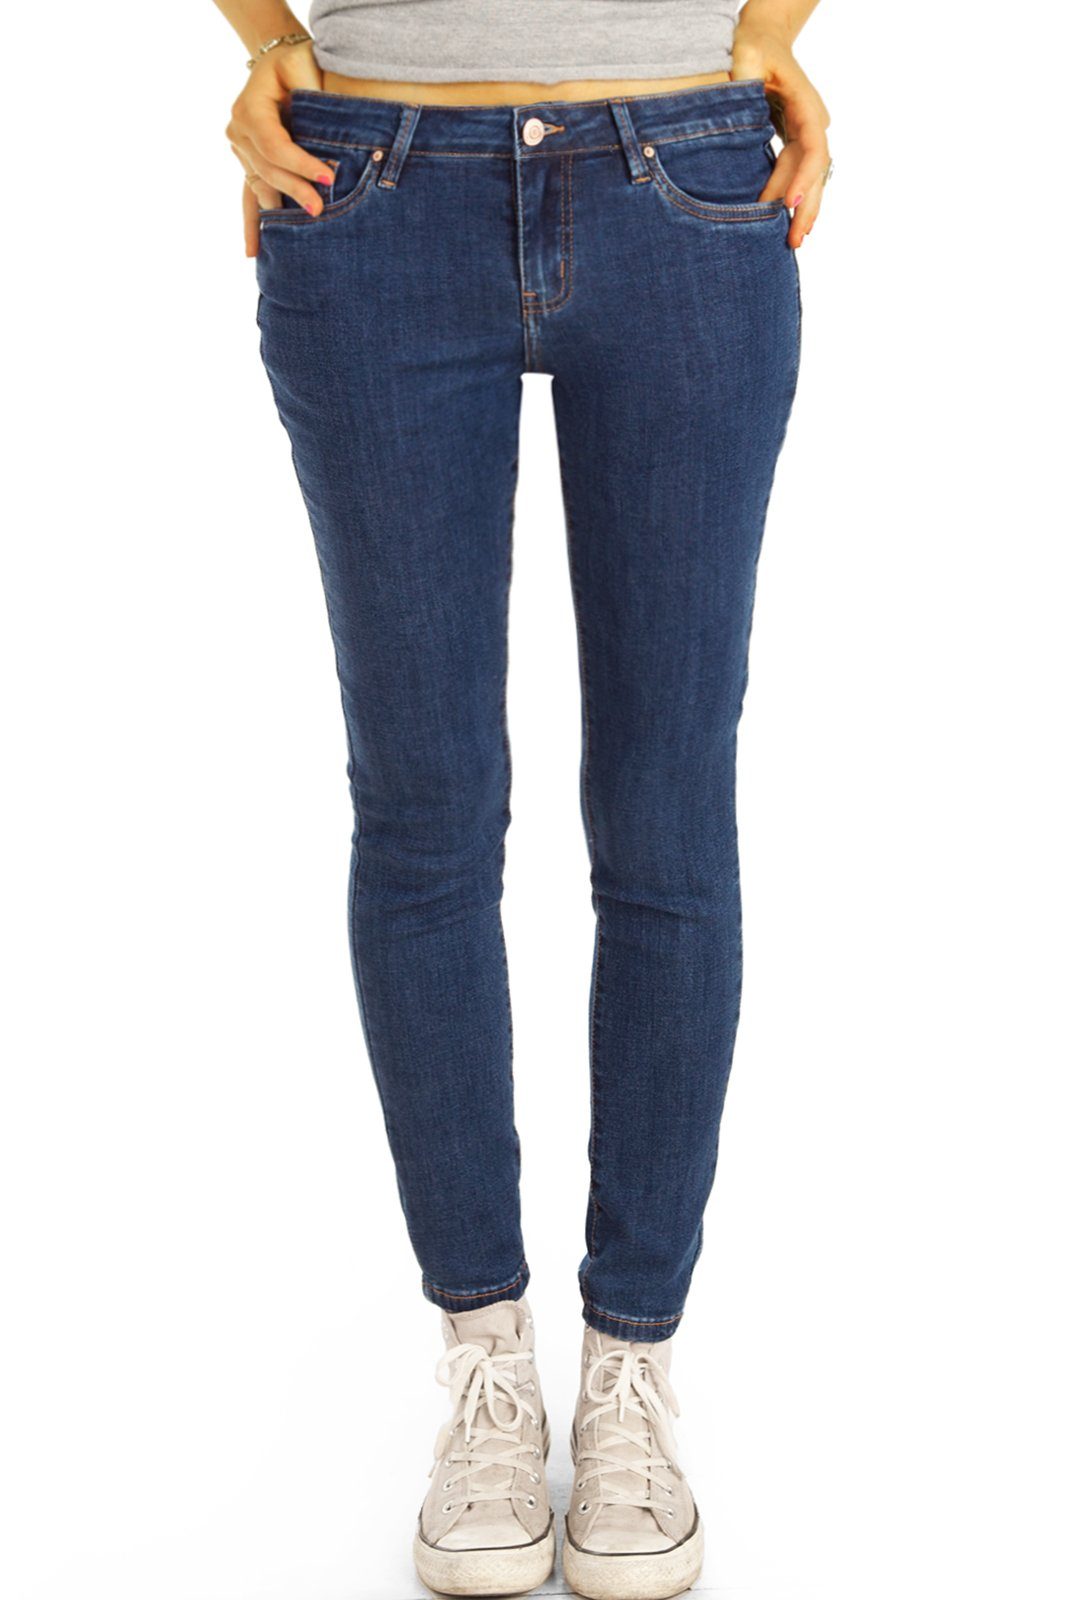 be styled Low-rise-Jeans Hüftjeans Skinny - Stretch-Anteil, - Stretch Hose dunkelblau slim 5-Pocket-Style Röhrenjeans Damen- j27p-1 mit